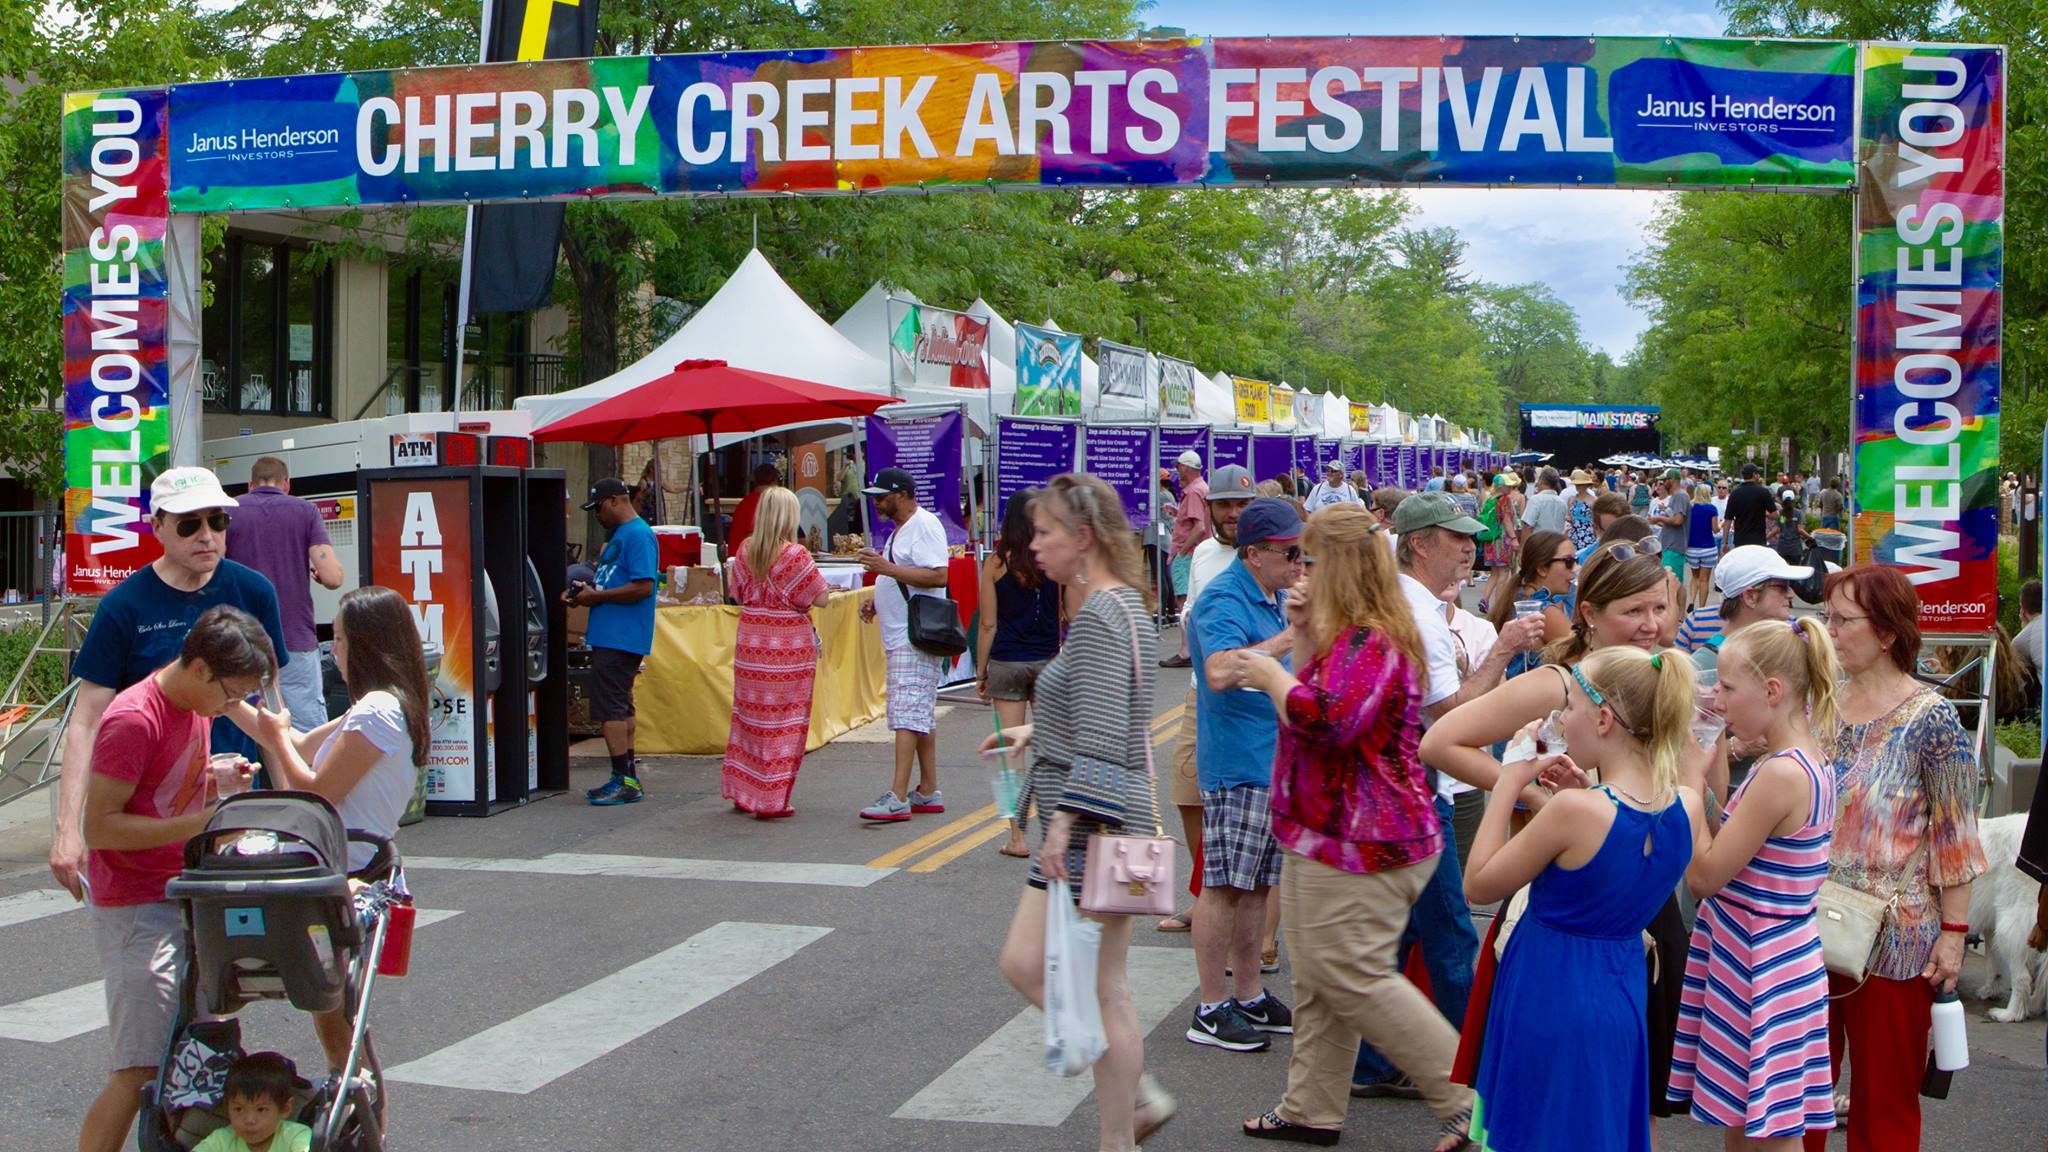 Cherry Creek Arts Festival